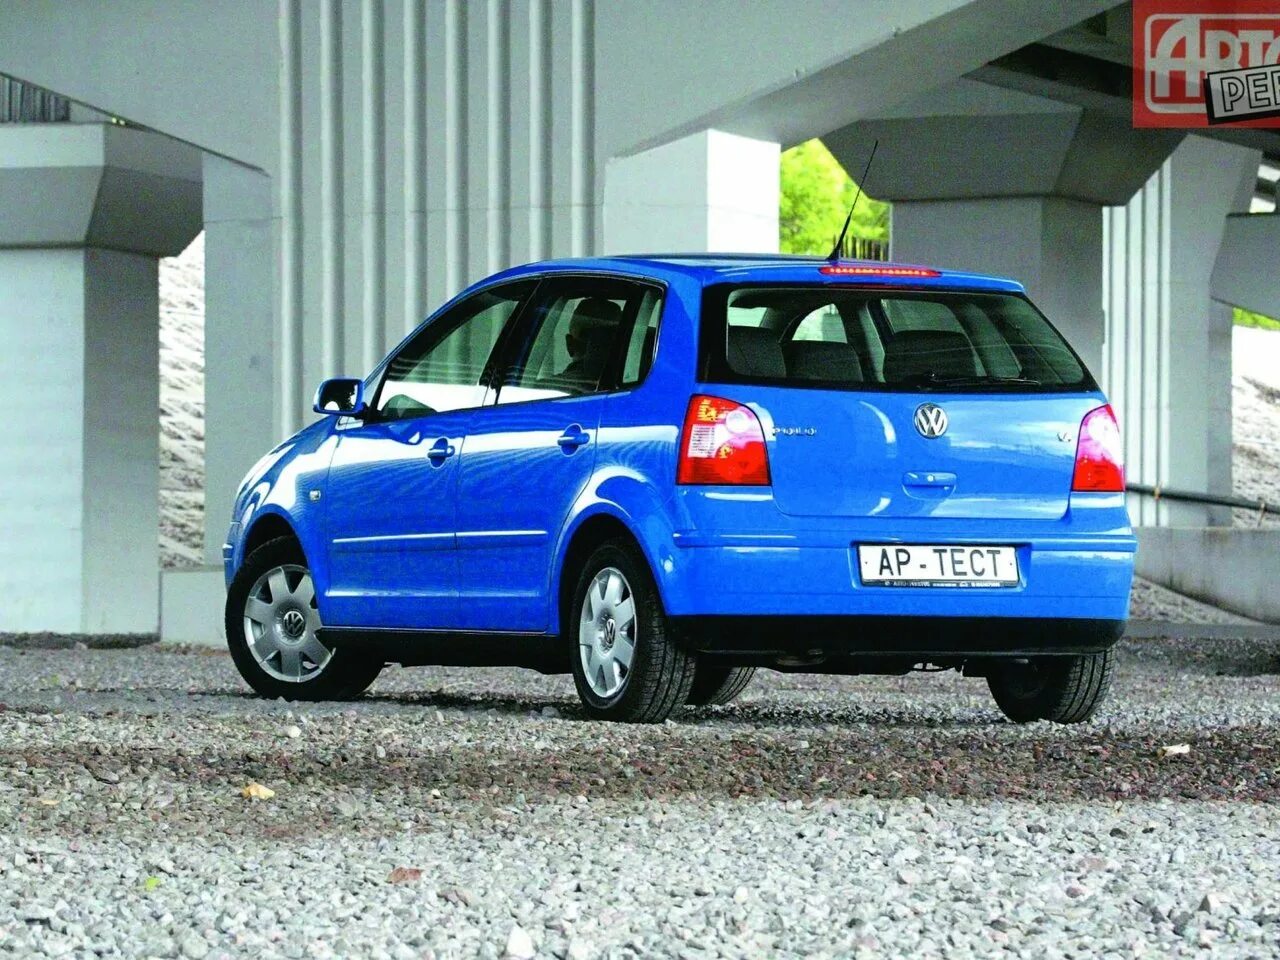 Volkswagen Polo хэтчбек 2001. Фольксваген поло 4 хэтчбек. Volkswagen Polo 2001 Hatchback. Volkswagen поло хэтчбек 2001. Поло 4 хэтчбек